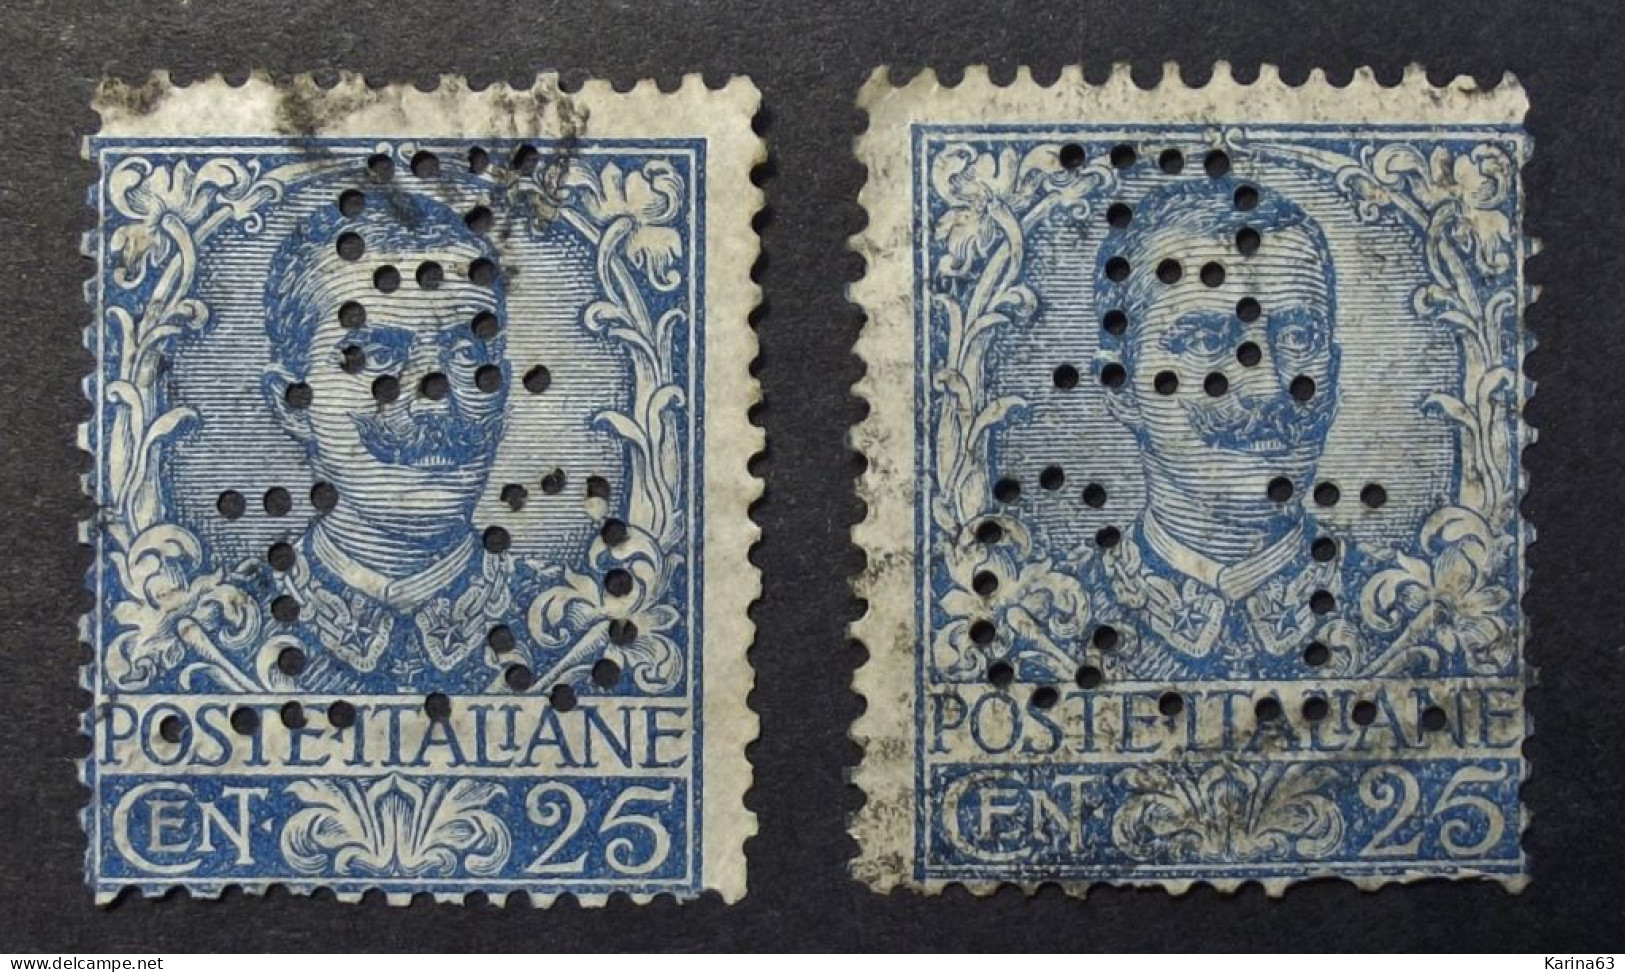 Italia - Italy - 1901  -  Perfin - Lochung -  B C I - Banco Commercial Italiana  -  Cancelled - Afgestempeld